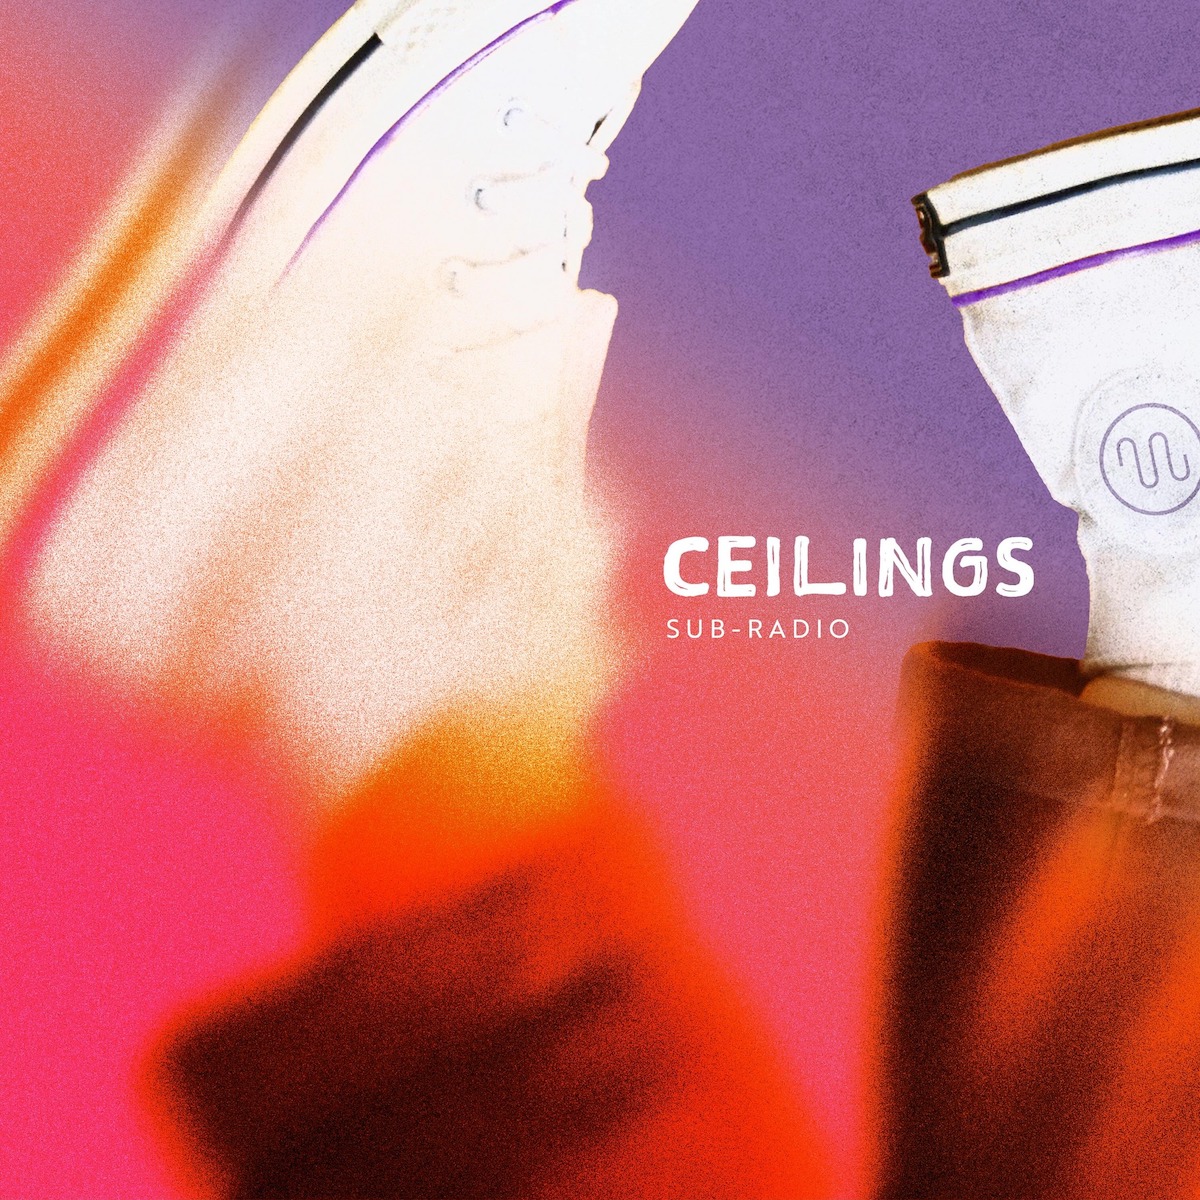 LISTEN: “Ceilings” by Sub-Radio